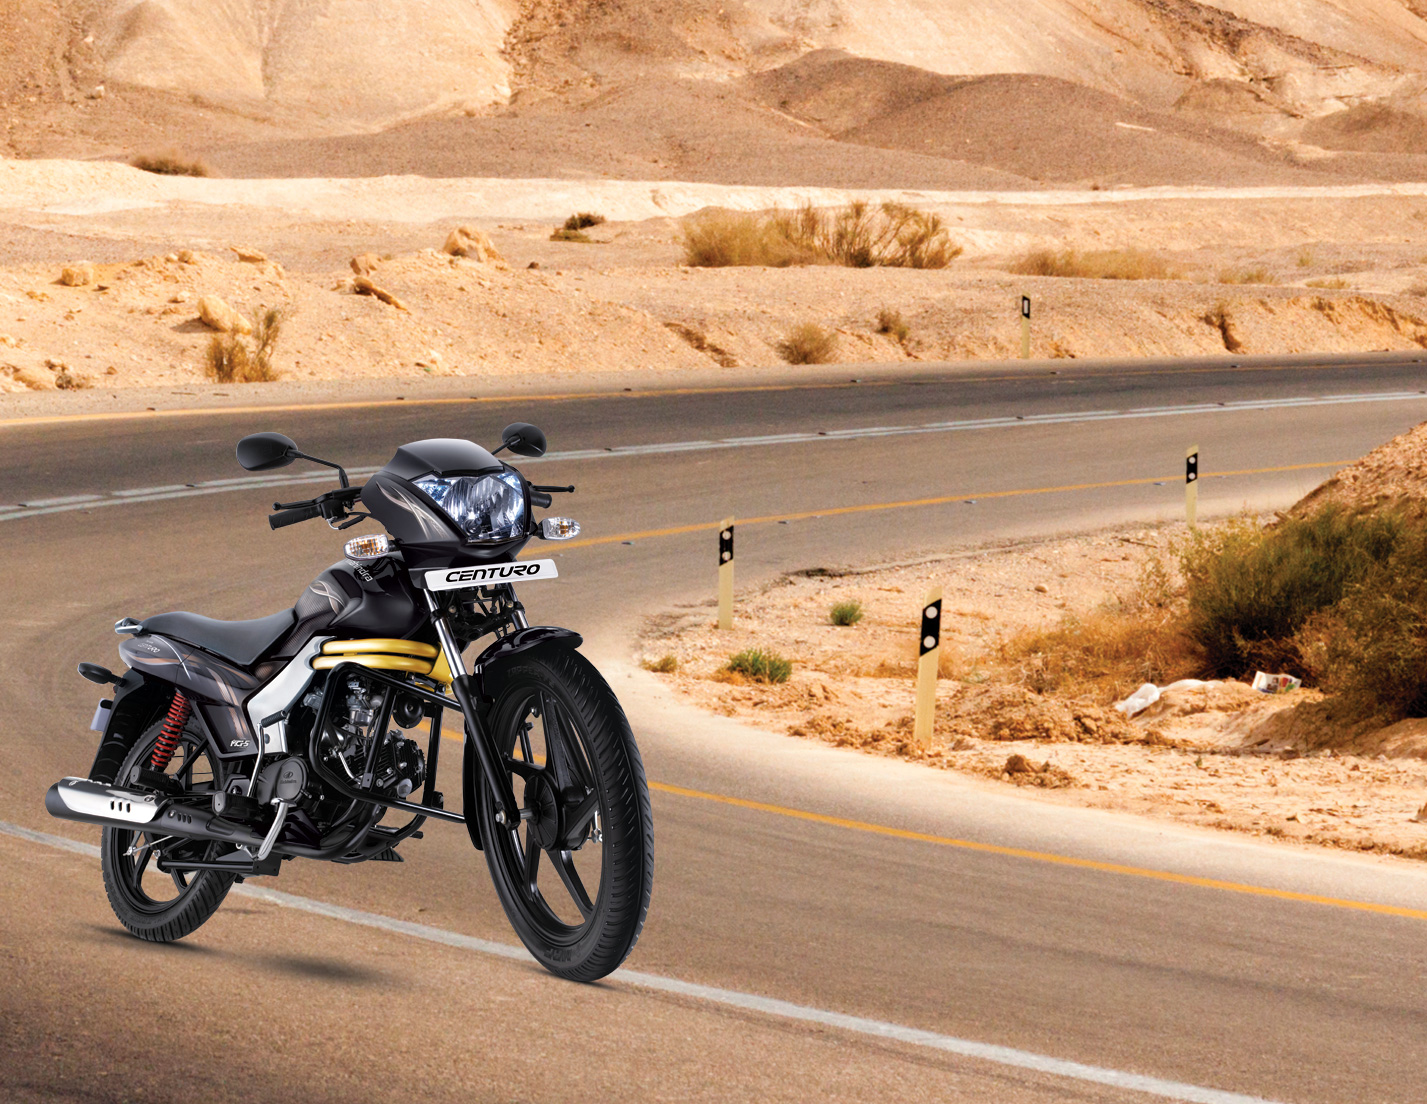 Mahindra launches £500 motorcycle